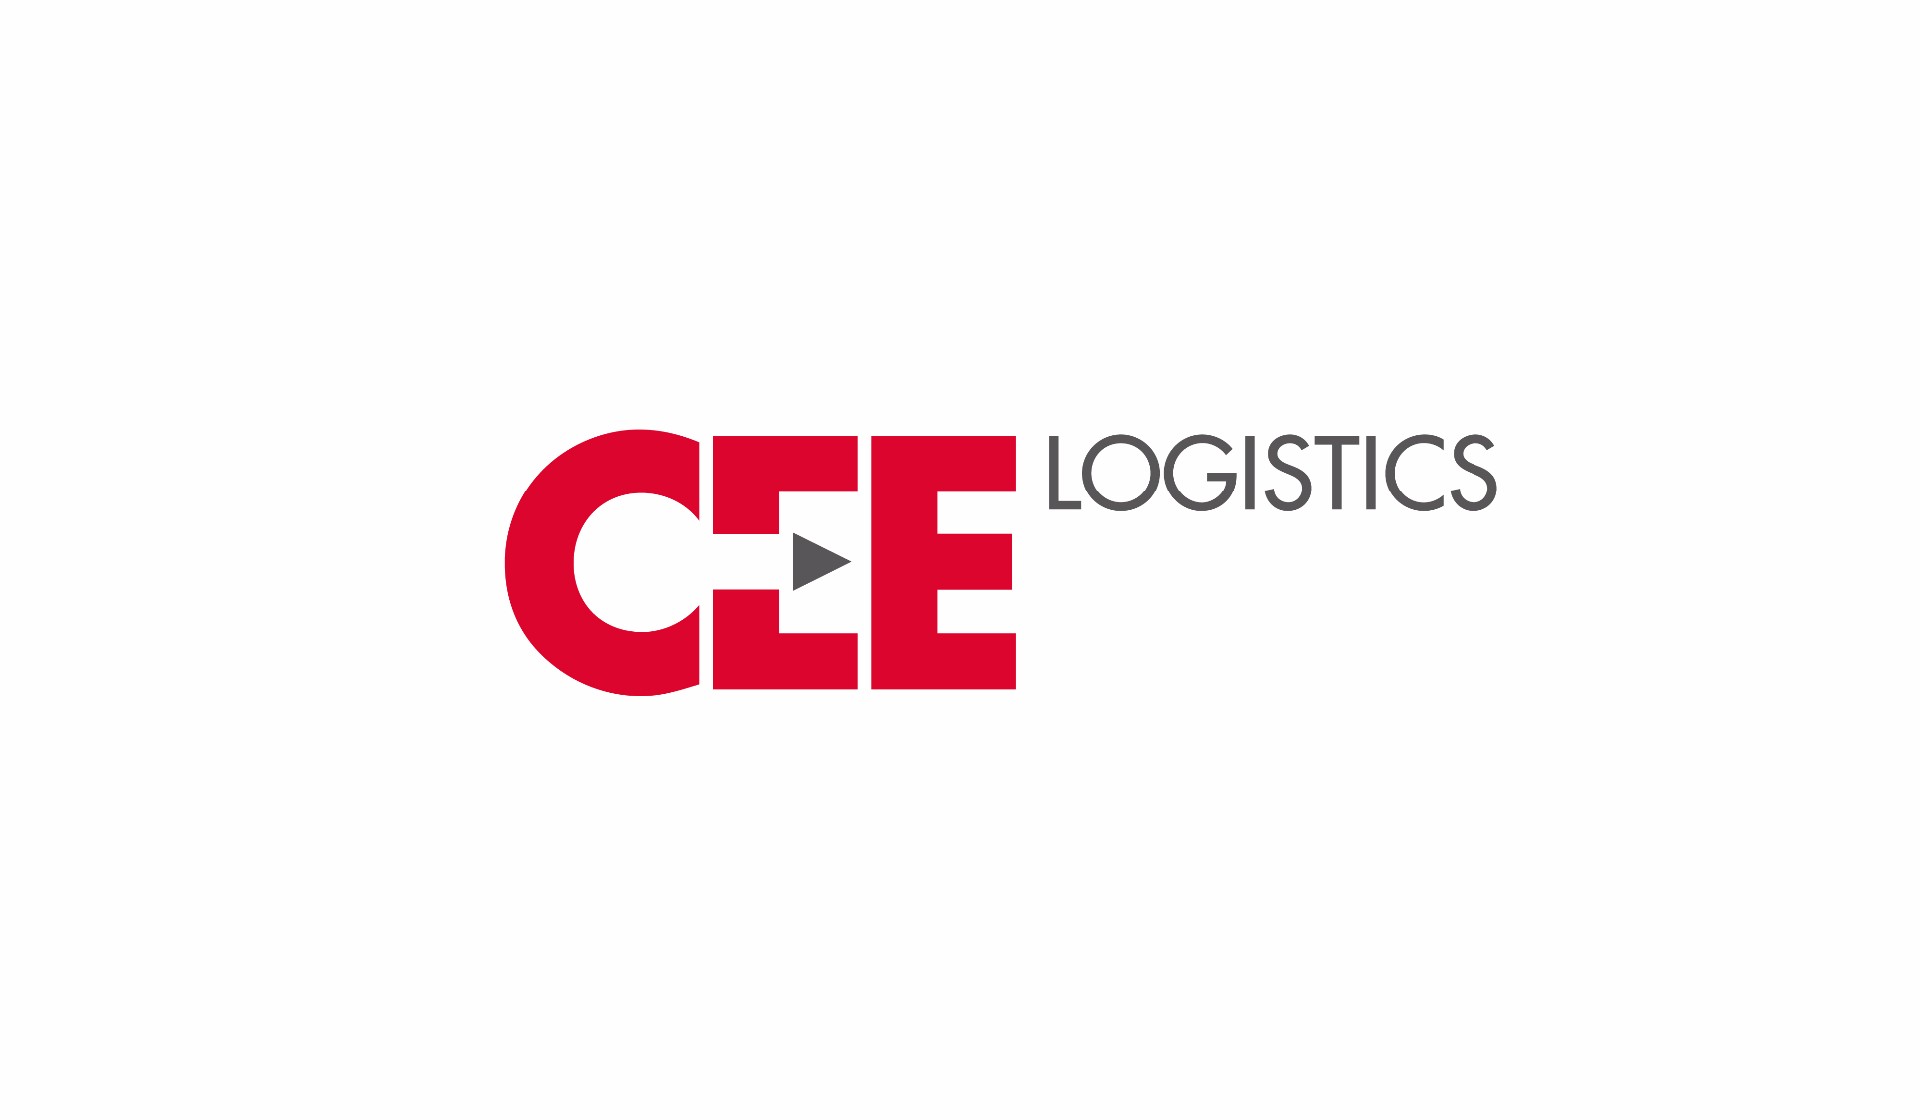 cee logistics logo-01